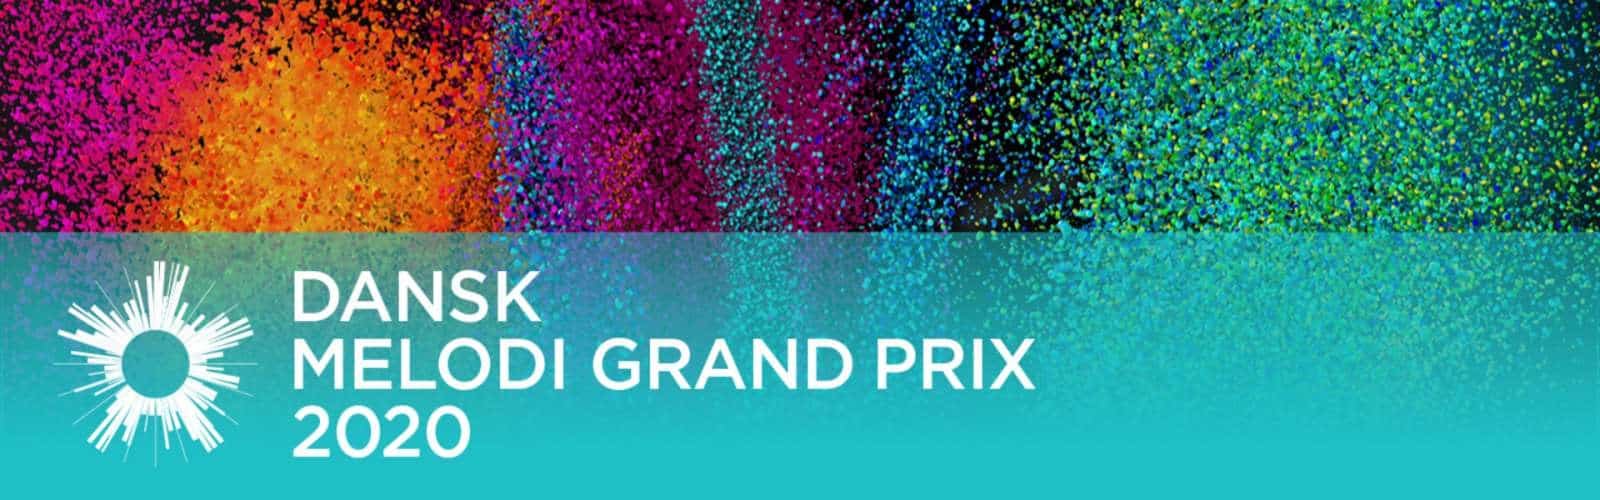 Din store guide til Melodi Grand Prix 2020